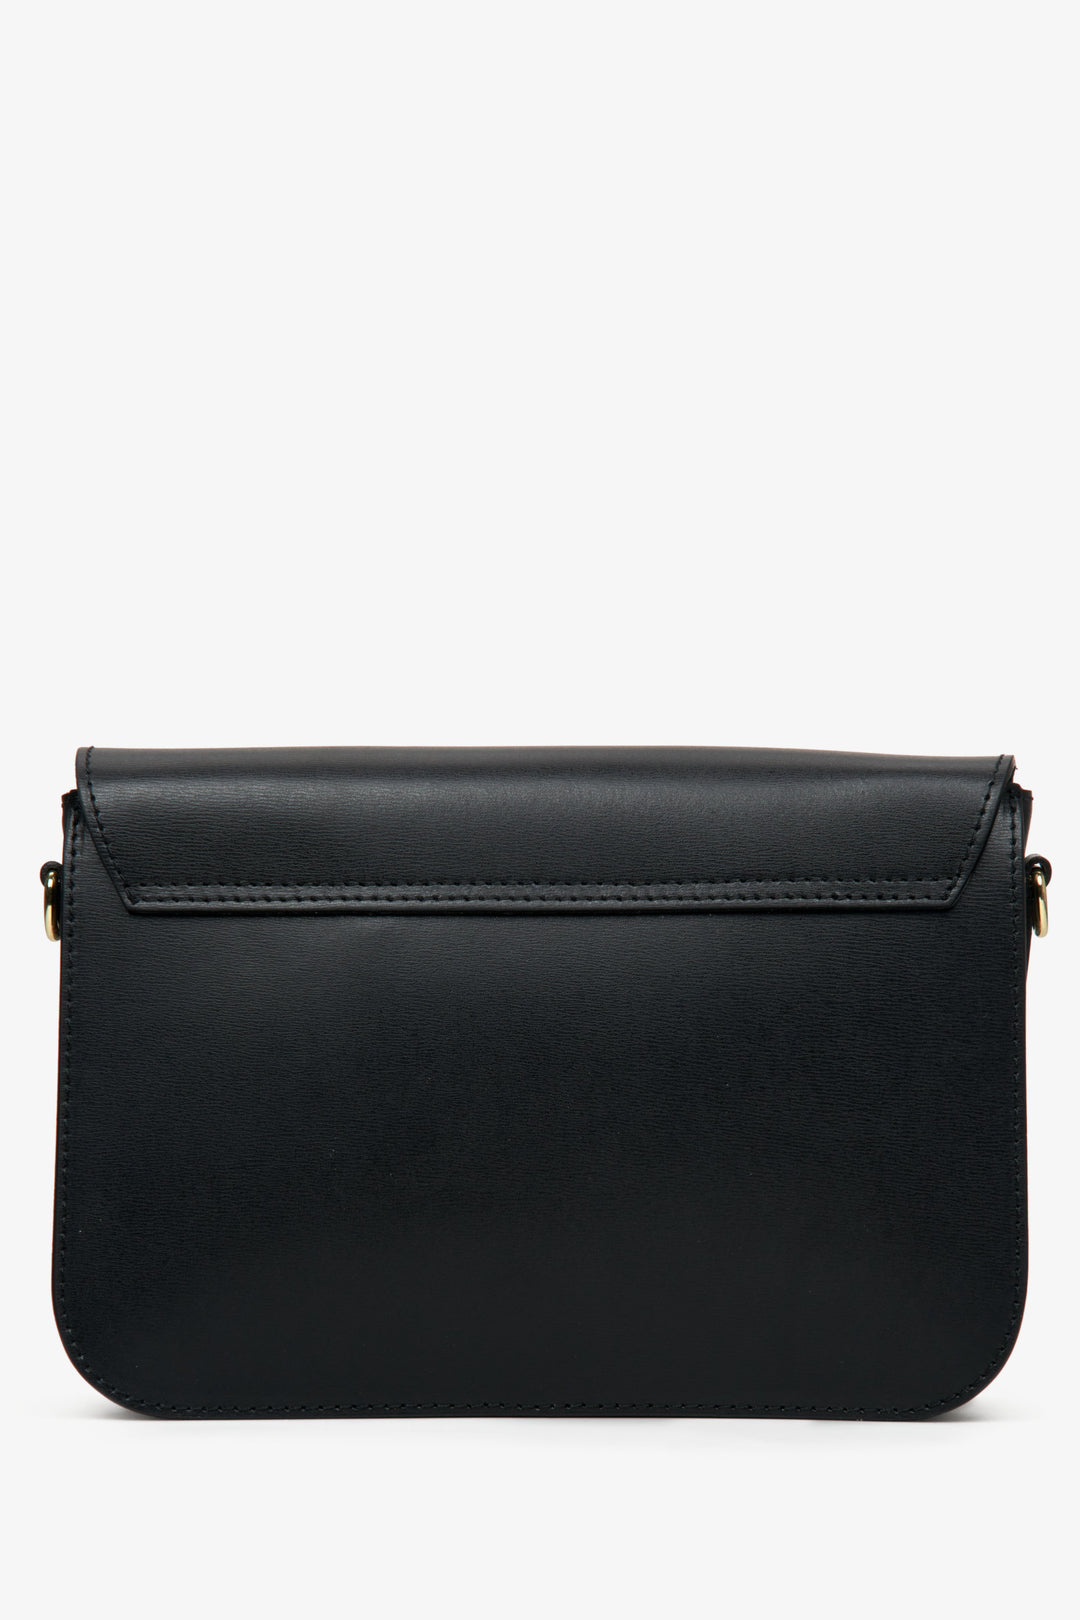 Black leather Estro women's handbag made of Italian natural fabrics - reverse.